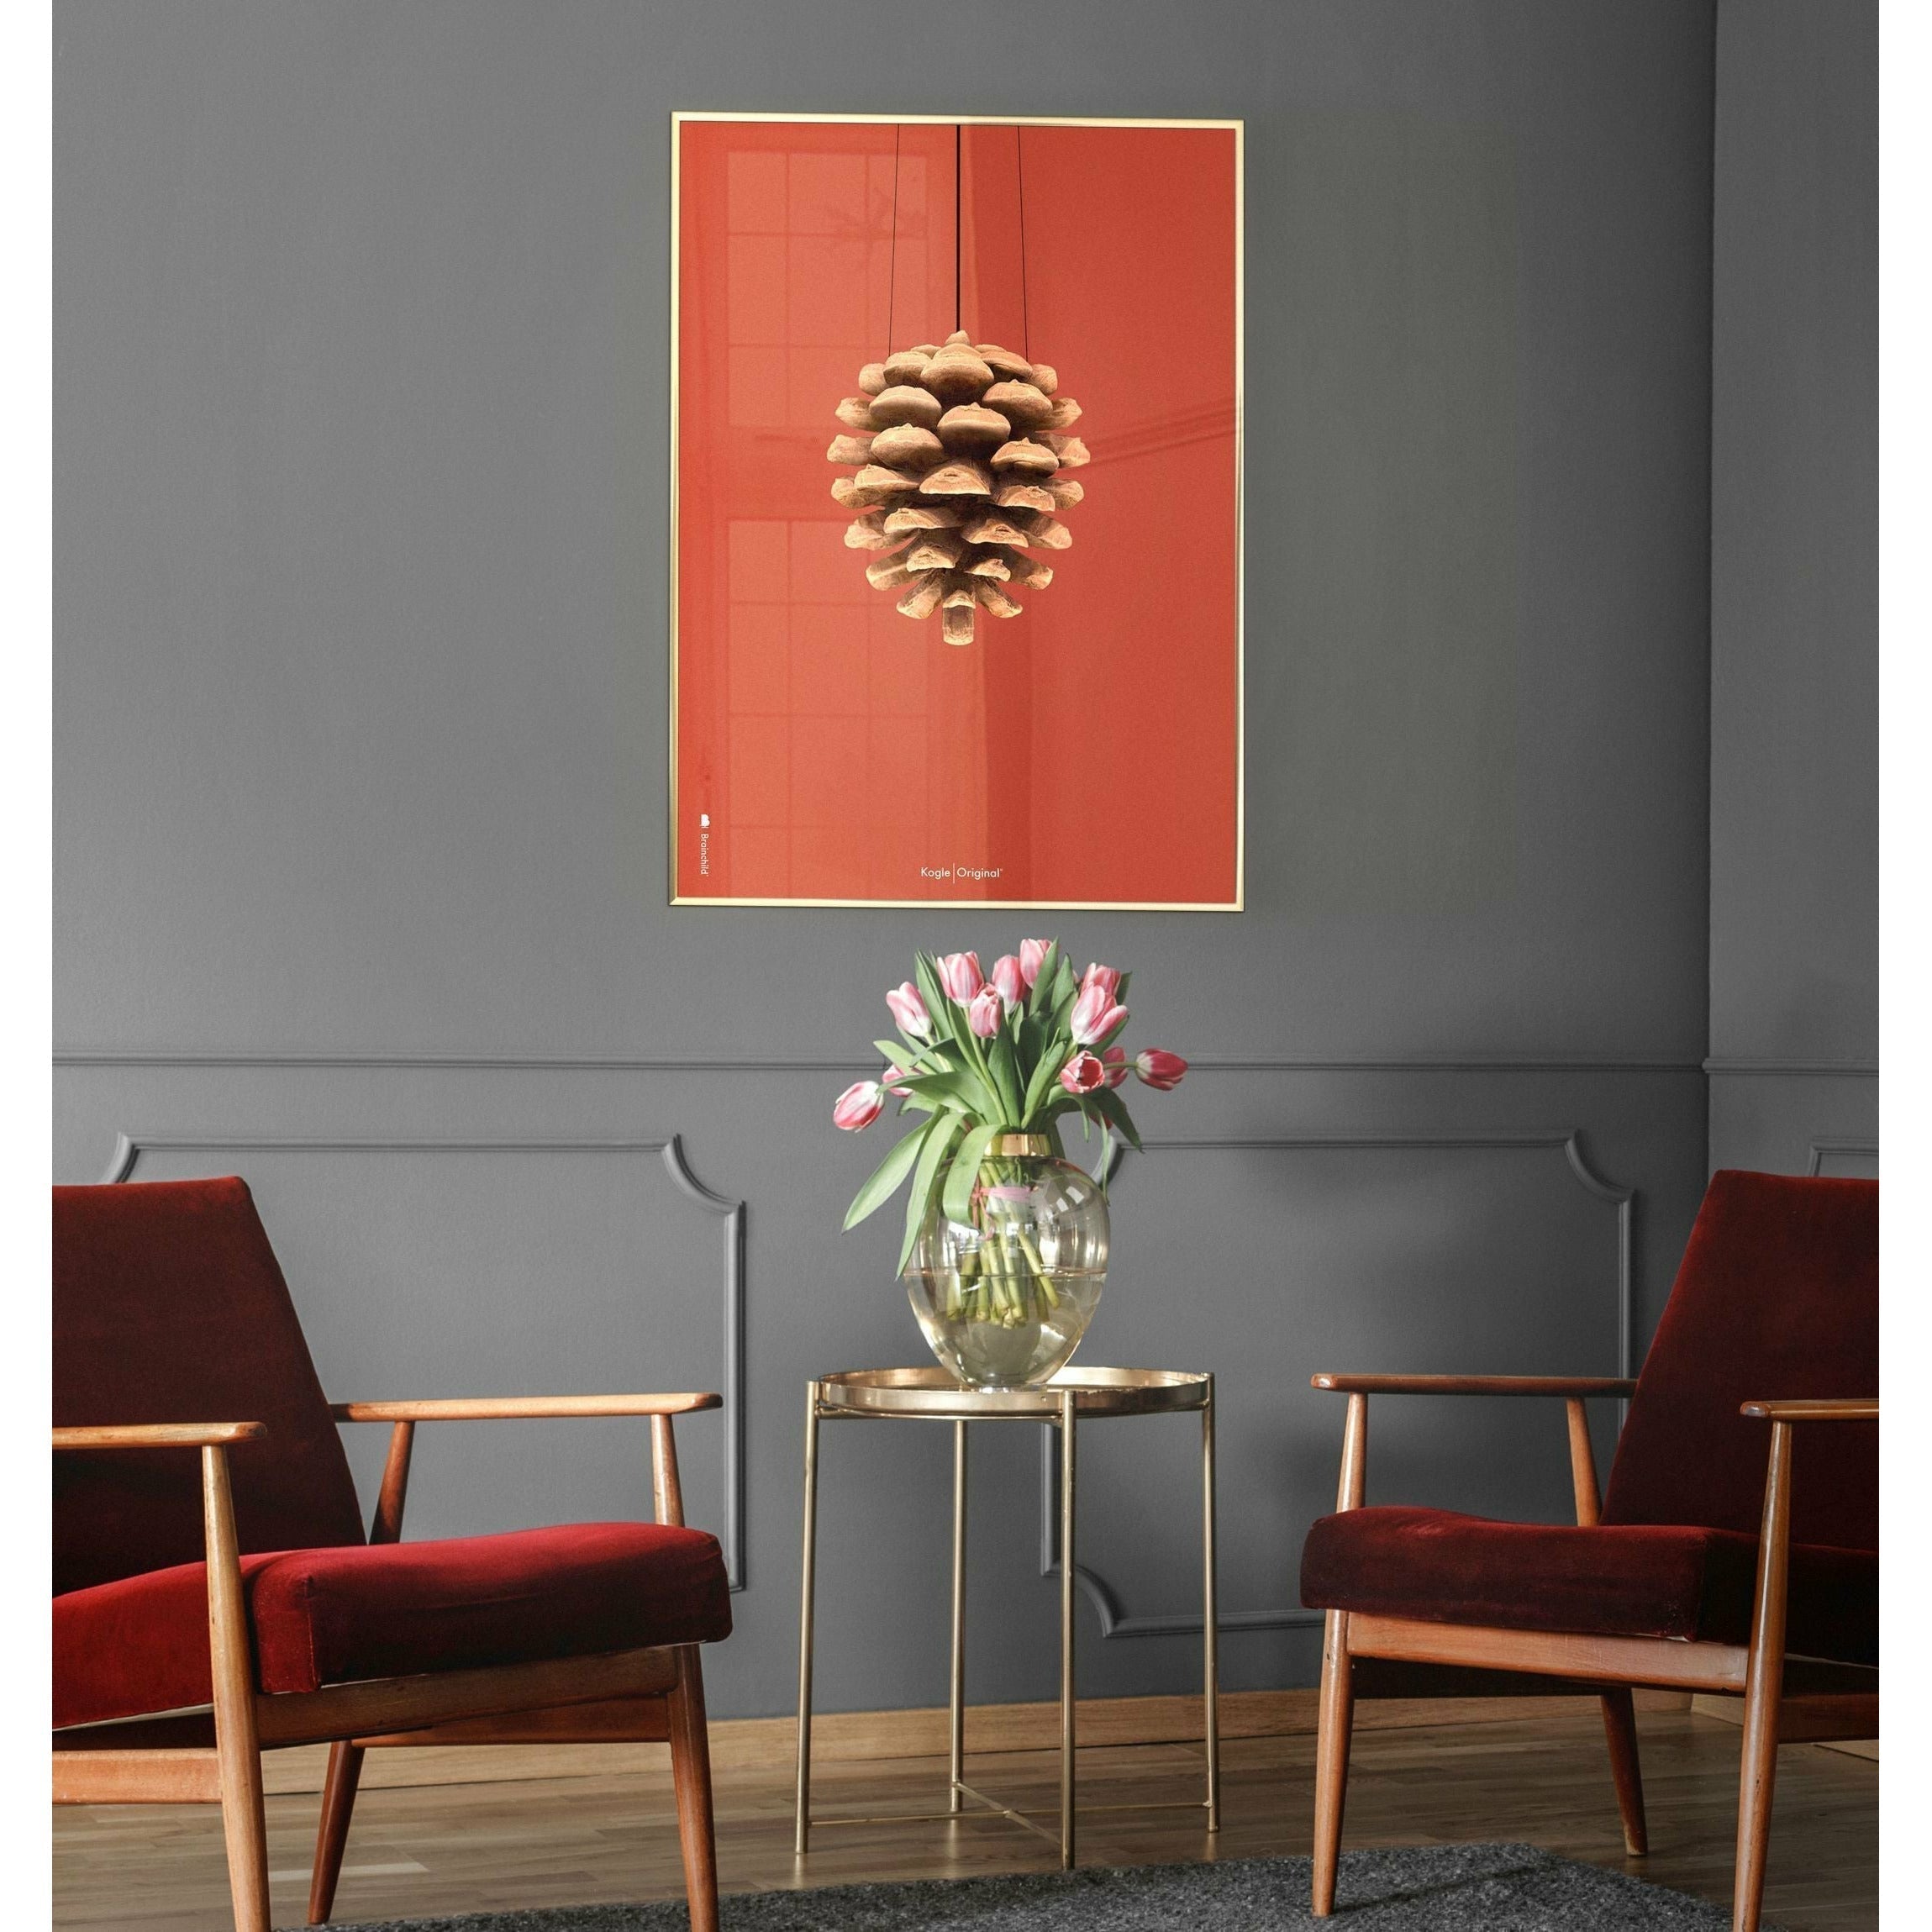 brainchild Pine Cone Classic Poster, messing gekleurd frame A5, rode achtergrond